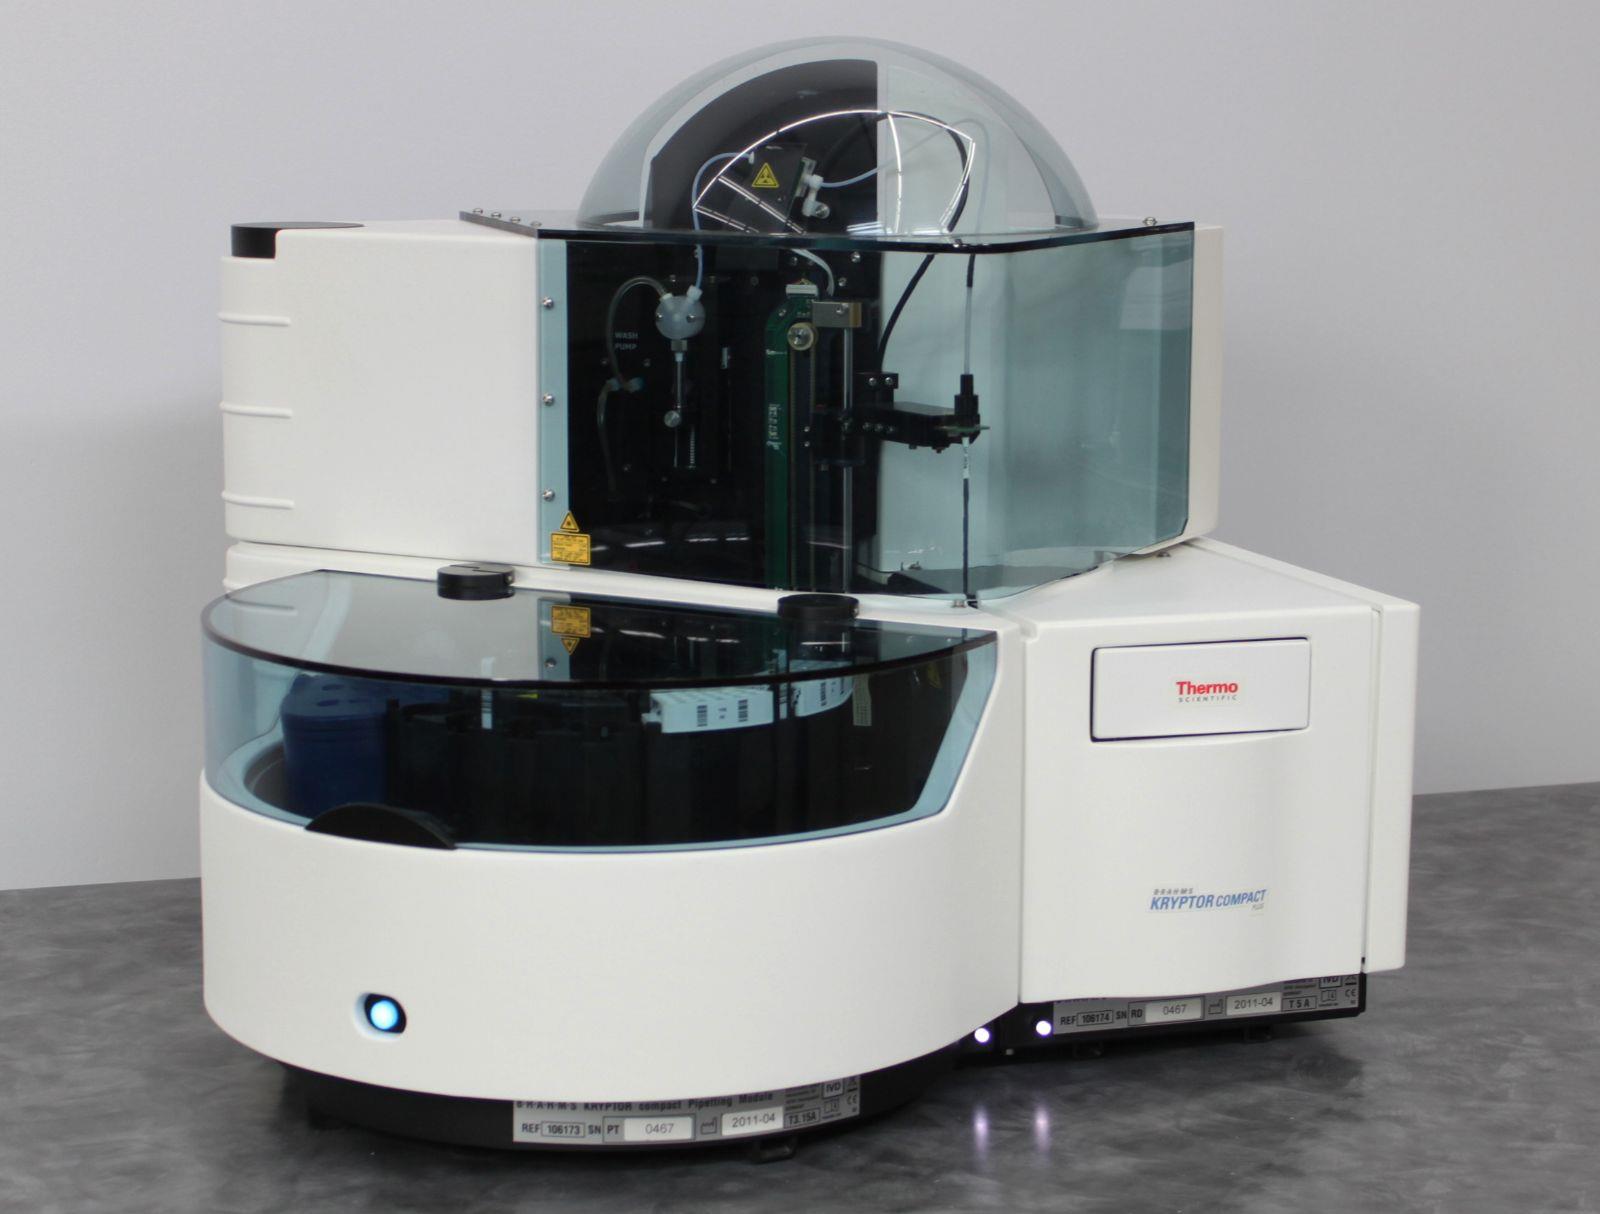 Image: Thermo Scientific BRAHMS KRYPTOR Compact Plus Automated Immune Analyzer (Photo courtesy of machinio)